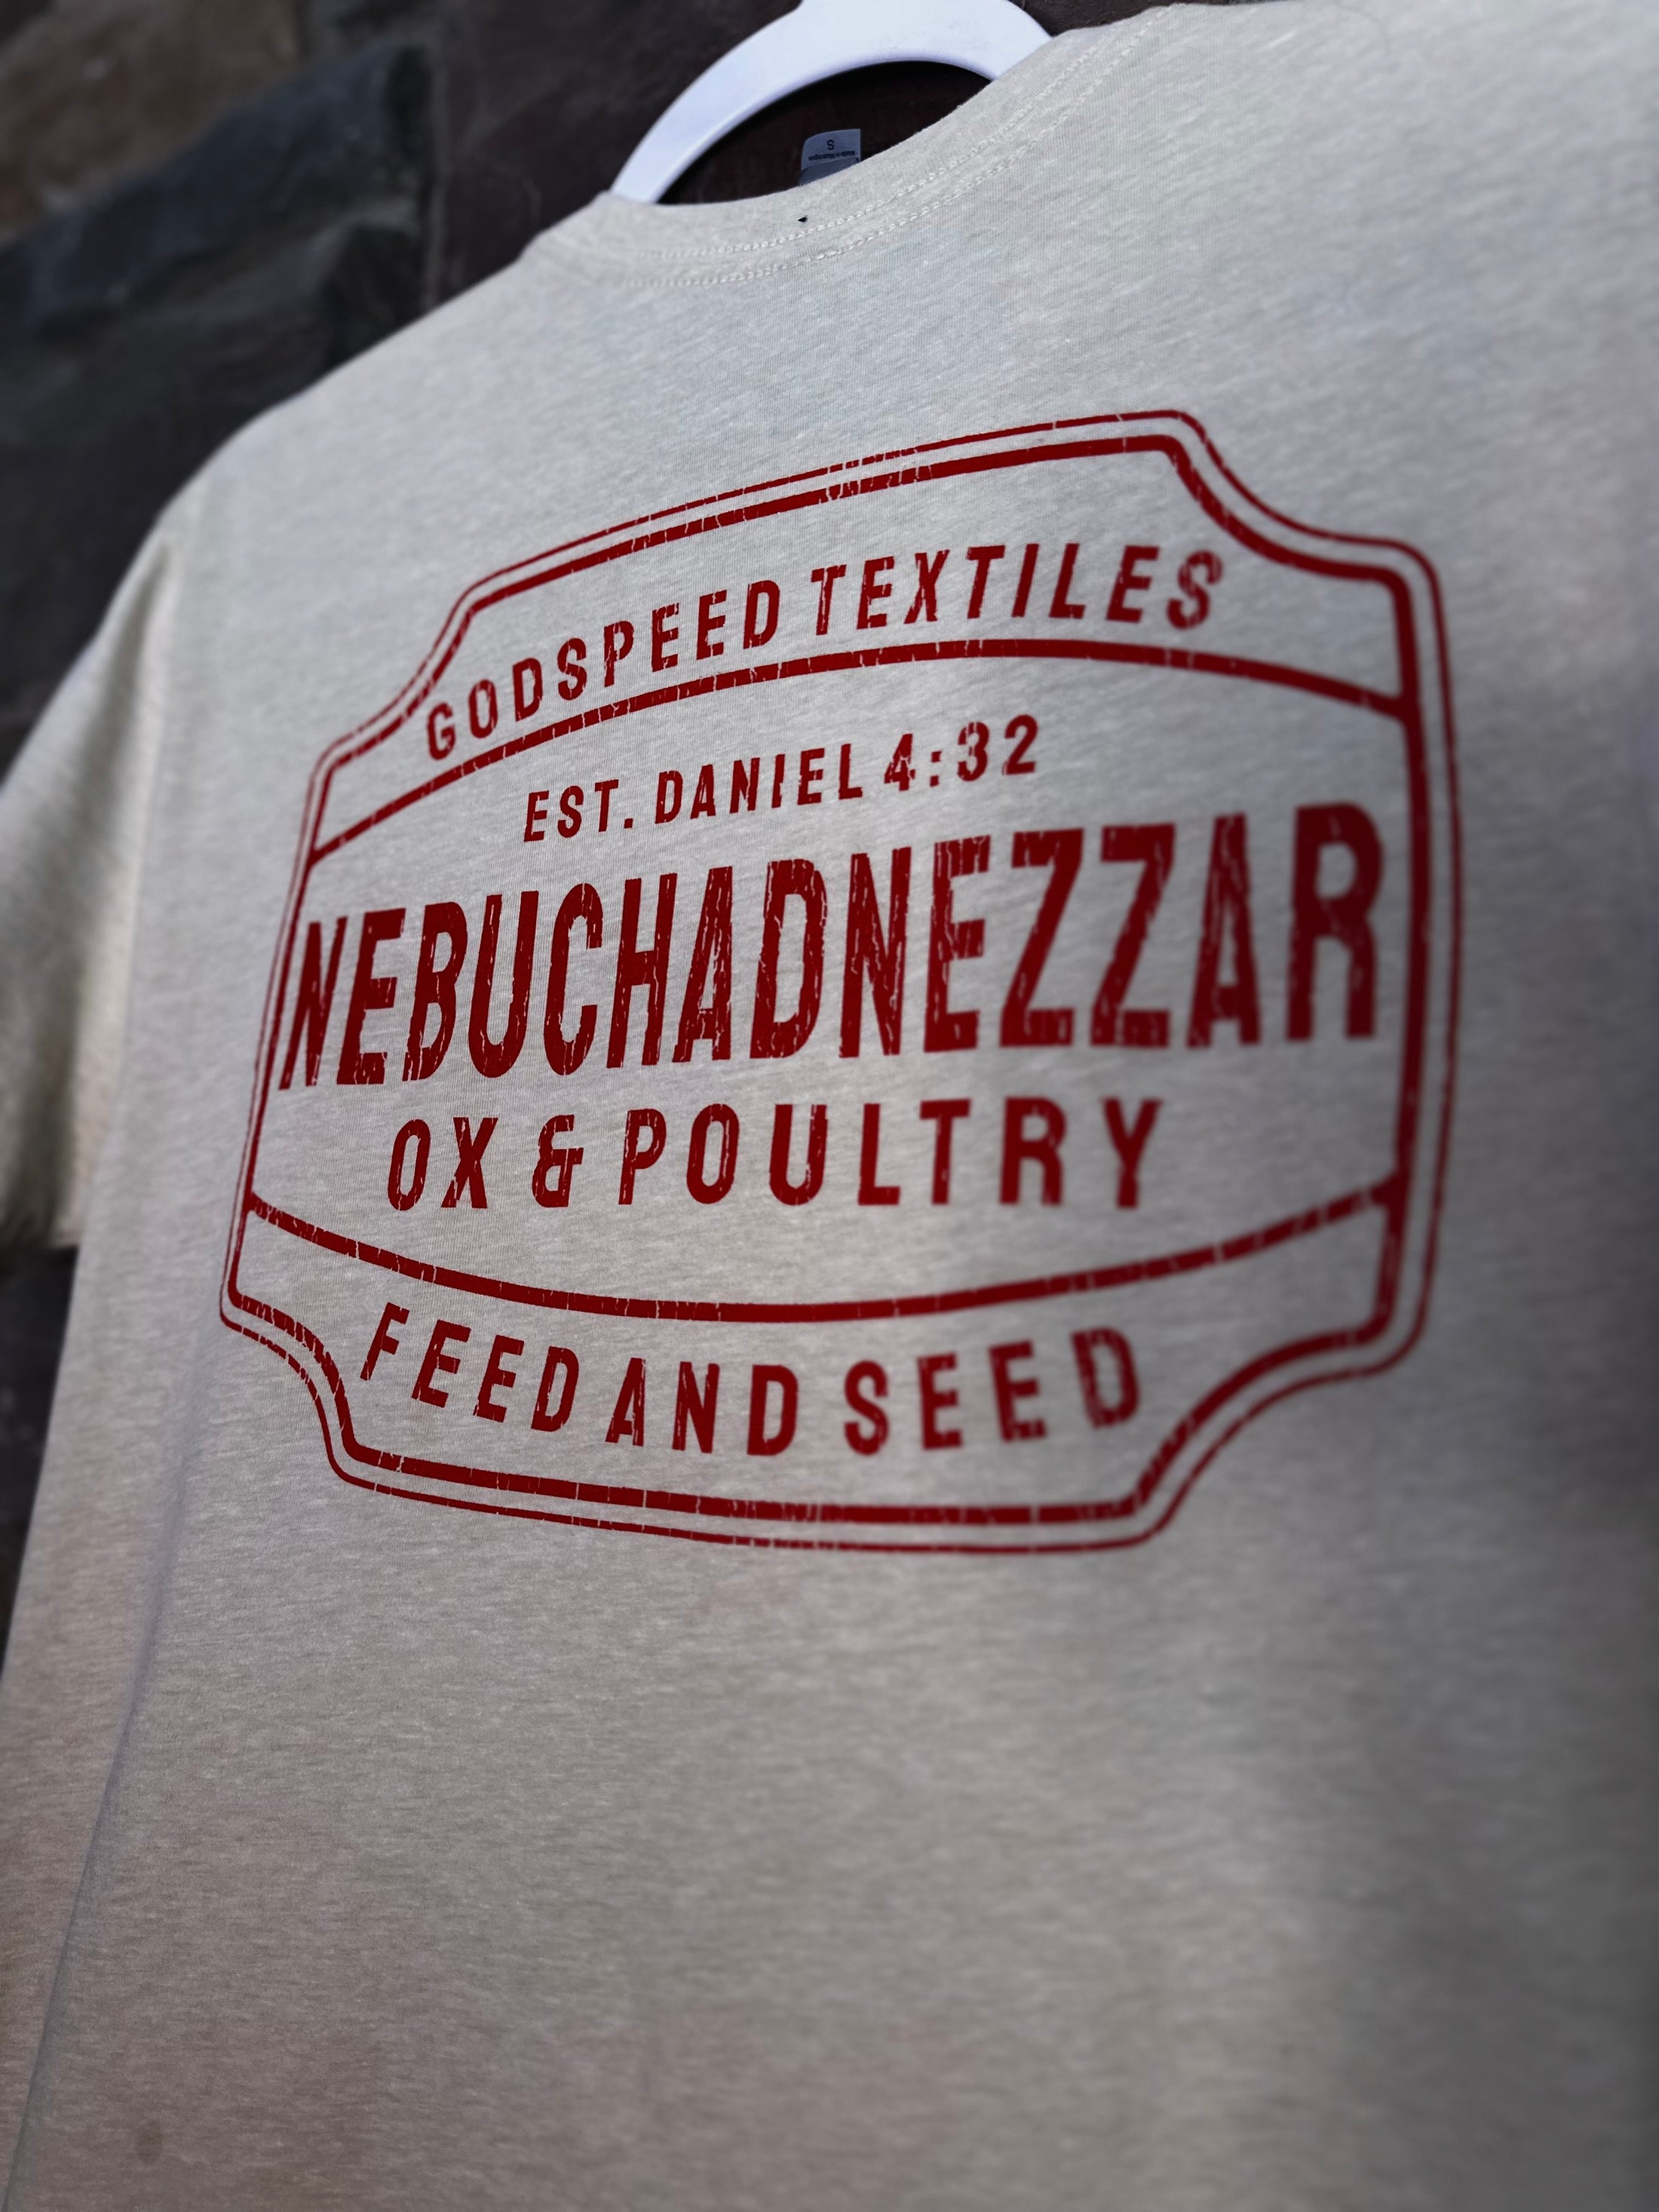 Godspeed Textiles Nebuchadnezzar Ox & Poultry